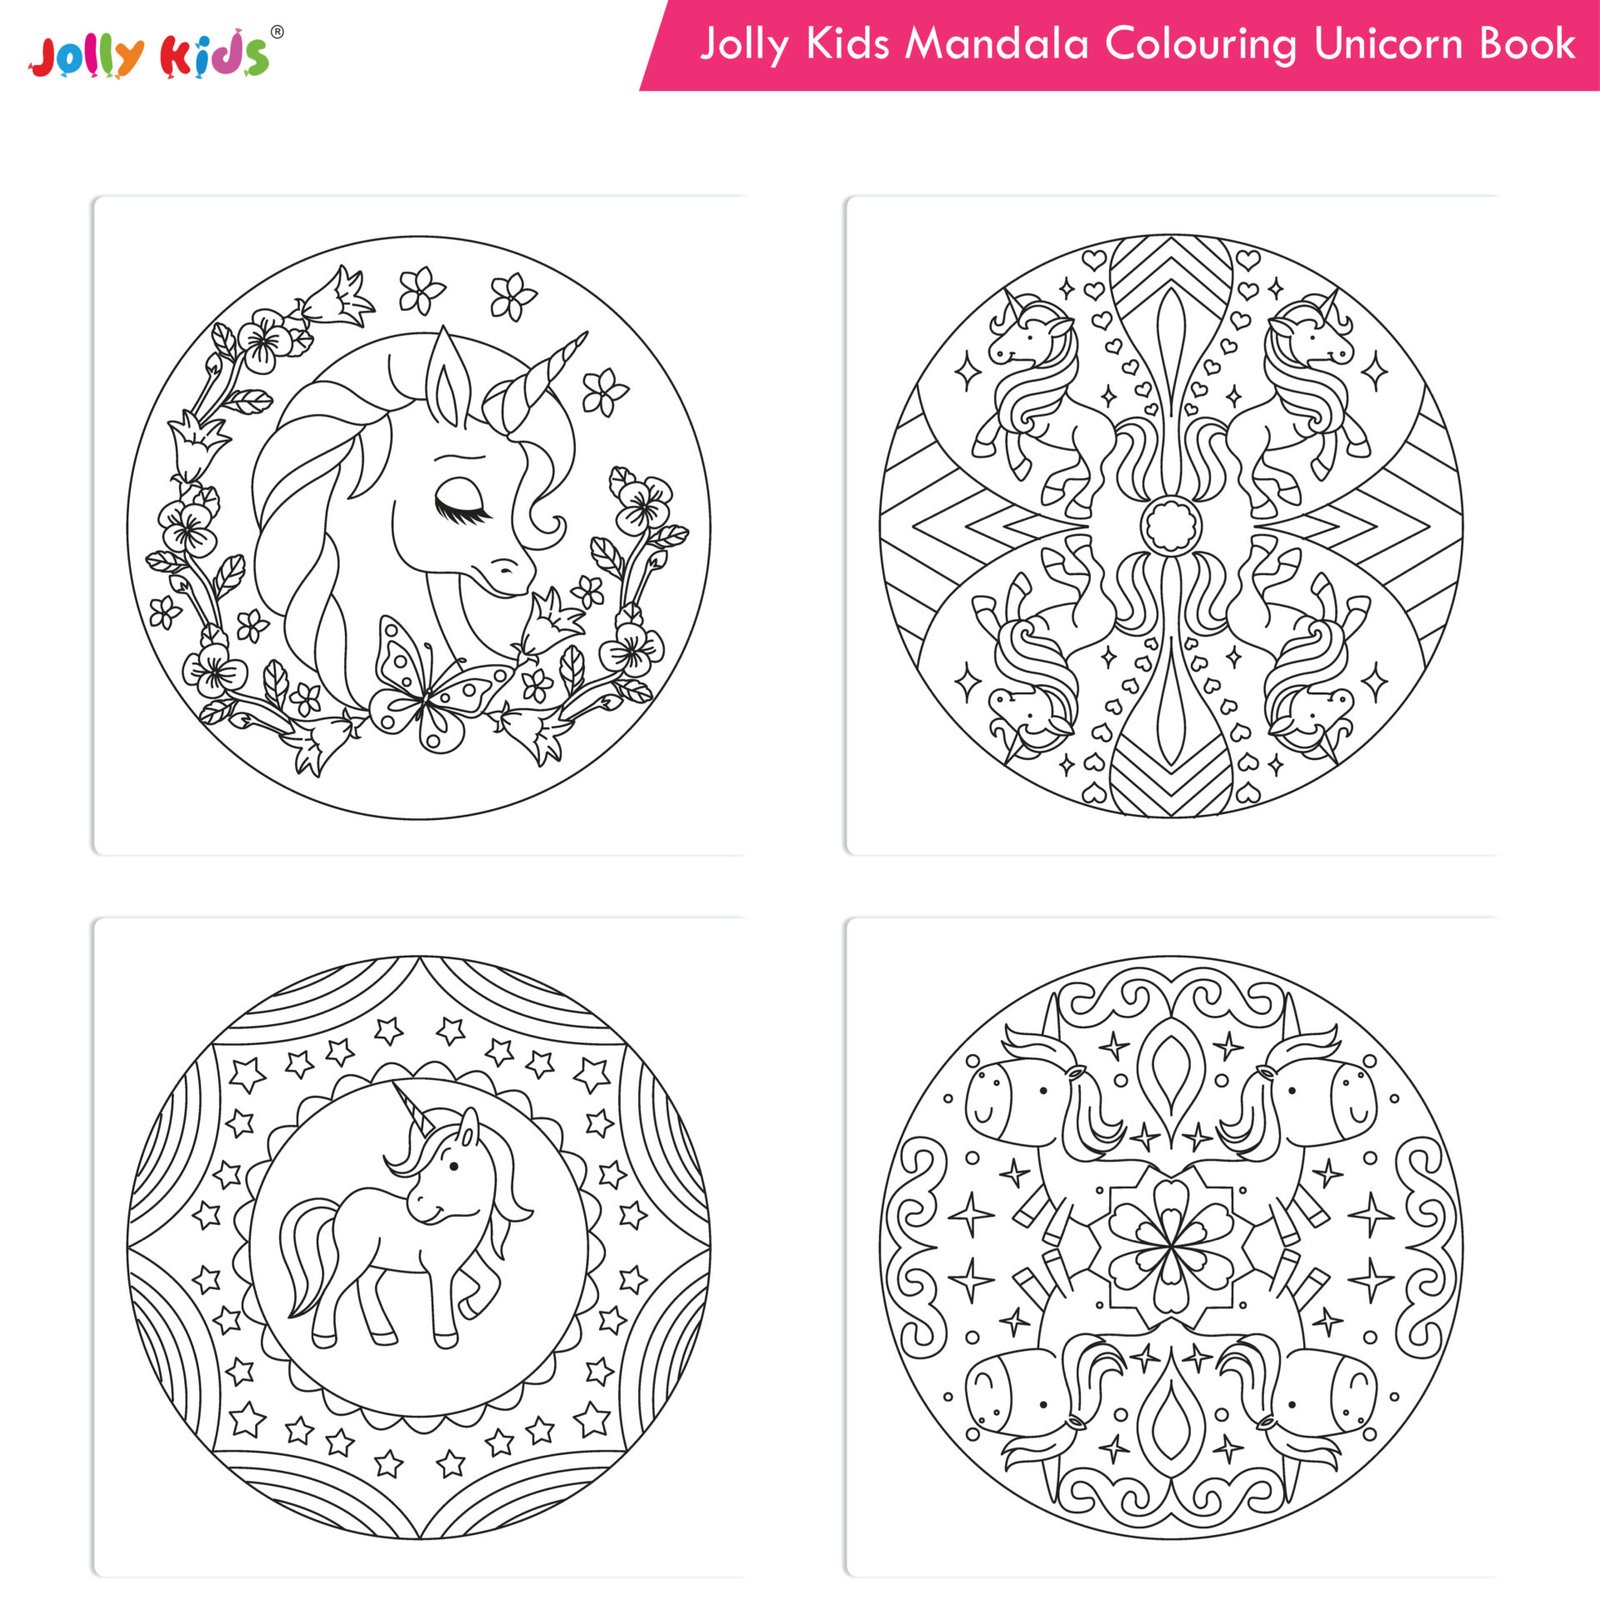 Jolly Kids Mandala Colouring Books Set Set of 4 6